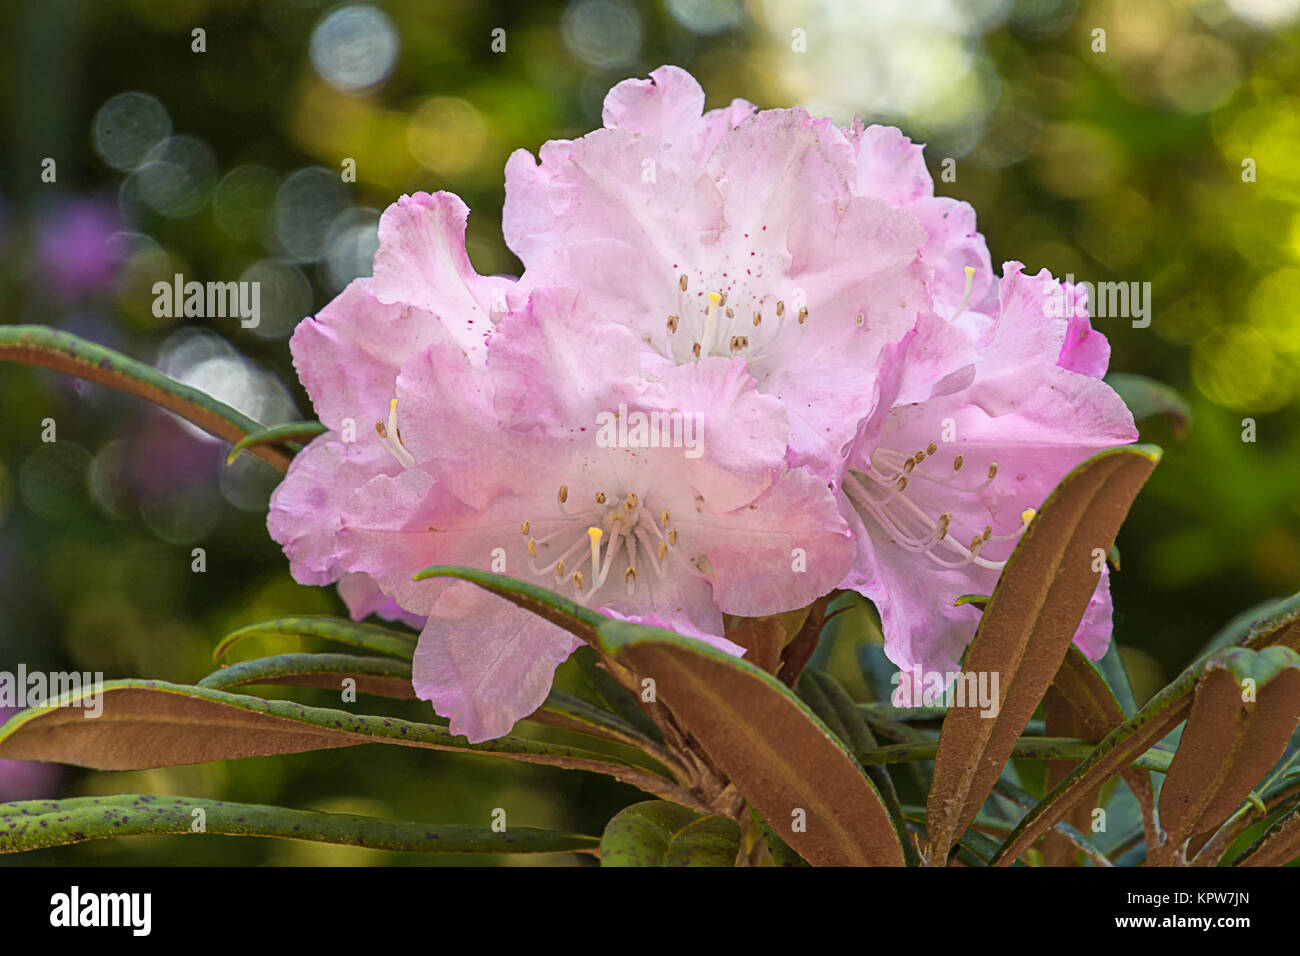 Basel botanischer garten bra glingen hi-res stock photography and images -  Alamy